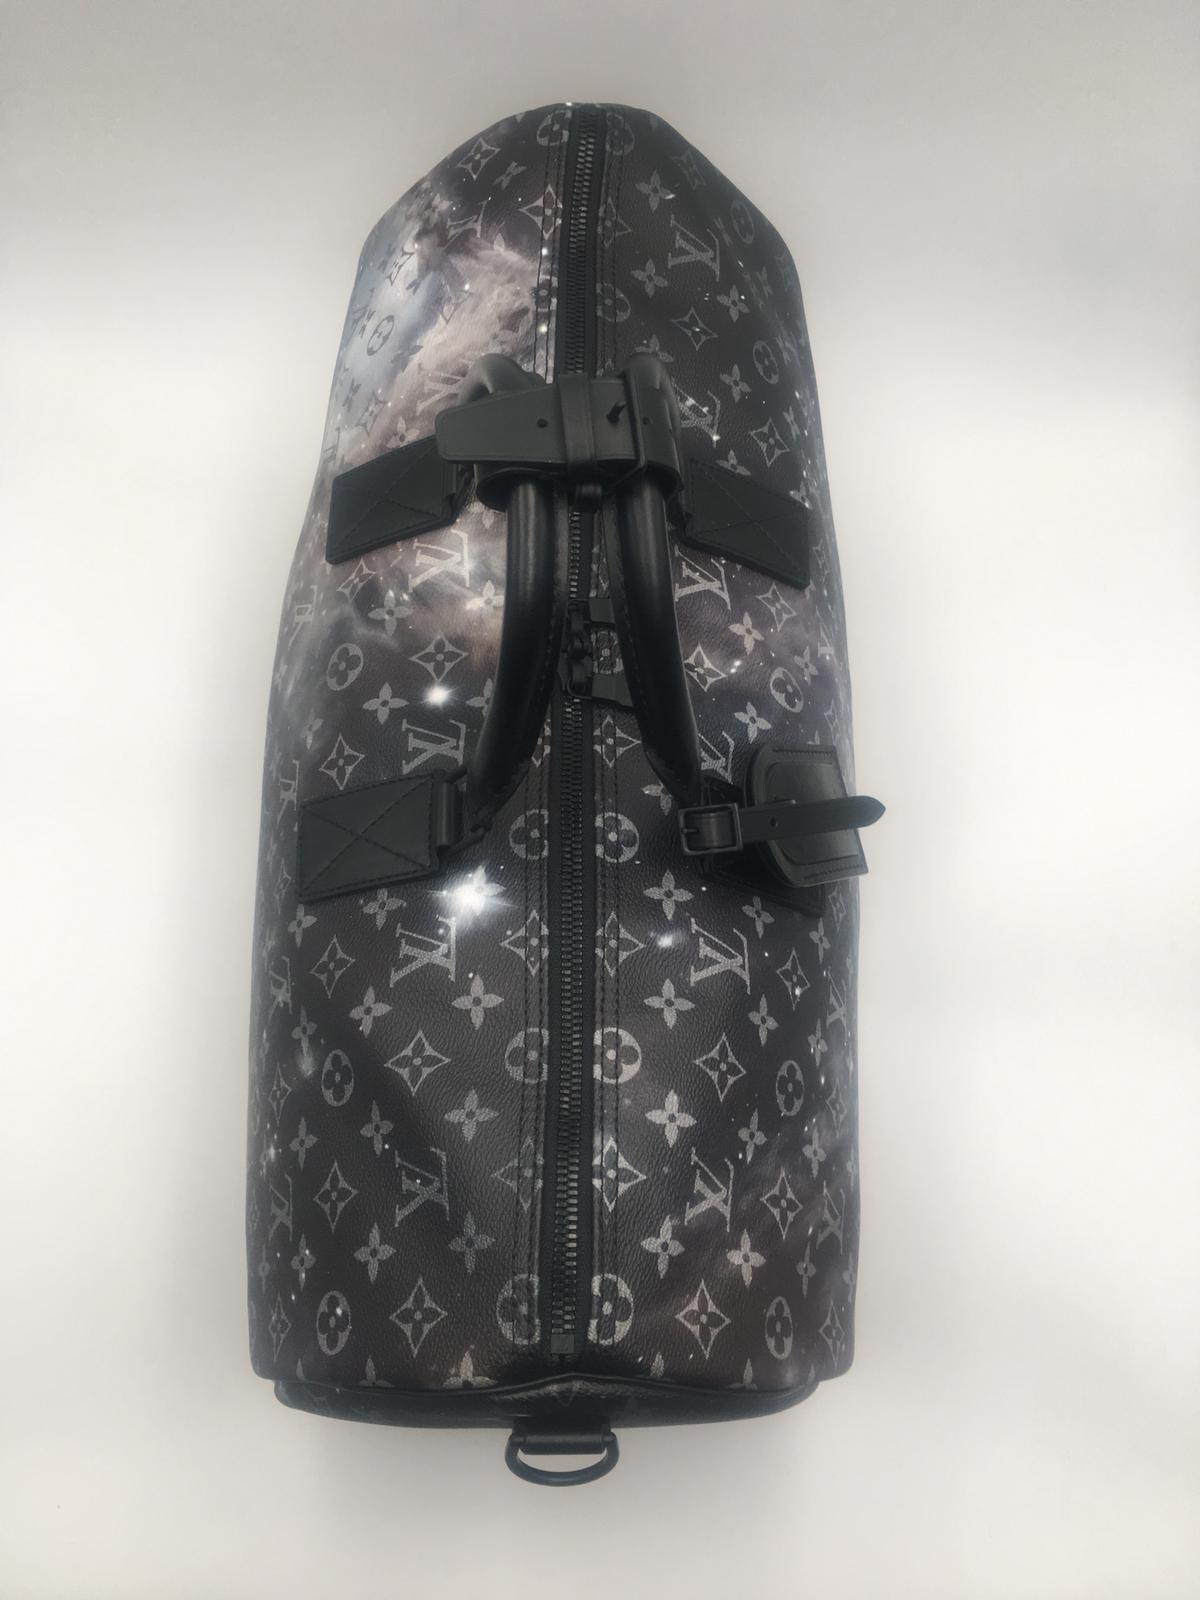 Louis Vuitton Black Grey Monogram Eclipse Keepall Bandouliere 50